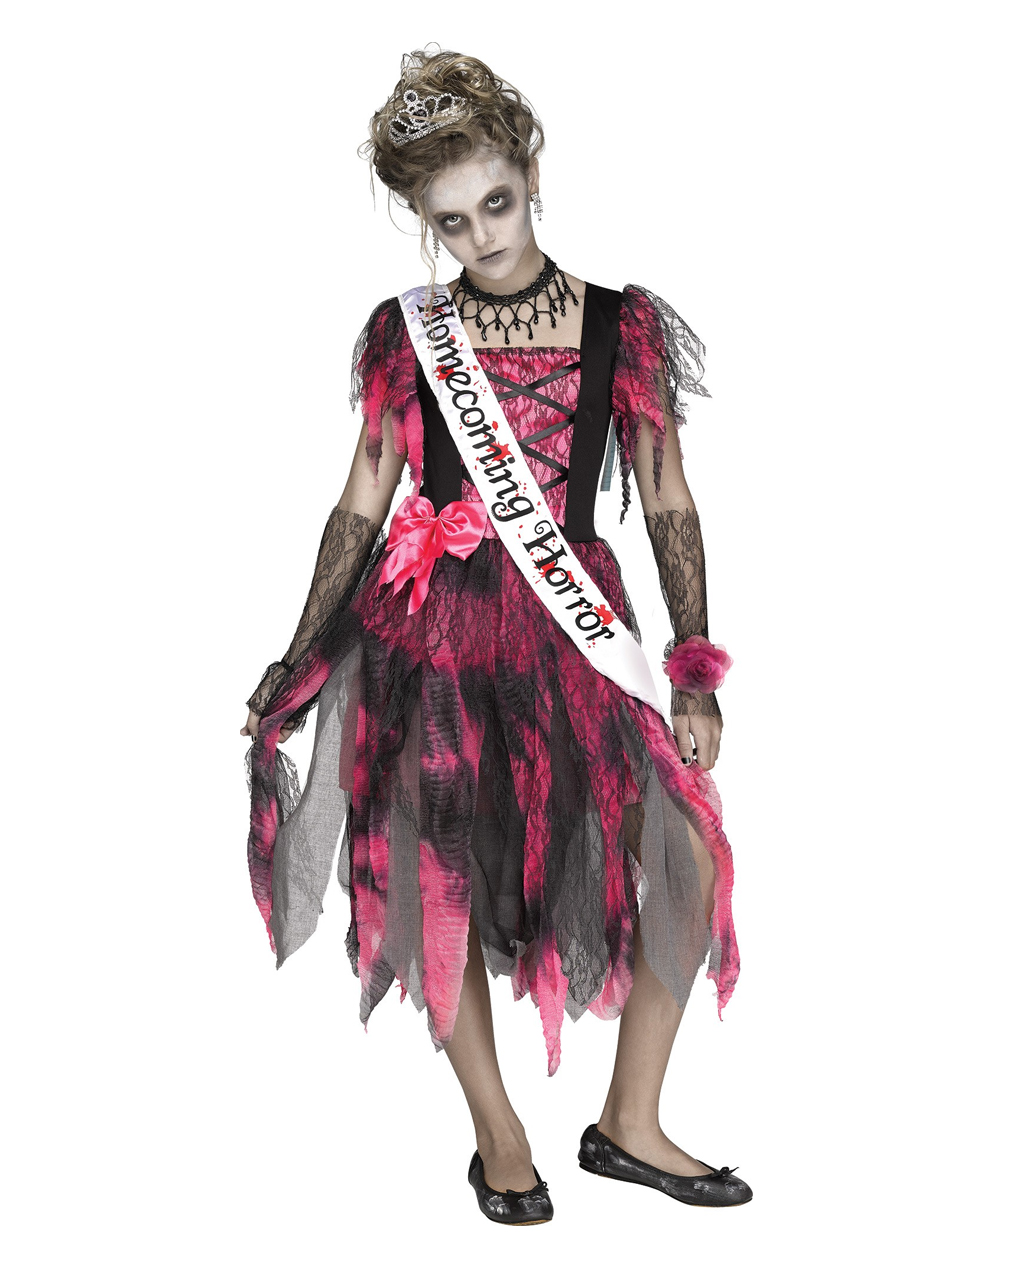 Homecoming Zombie Queen Costume for Halloween | Horror-Shop.com